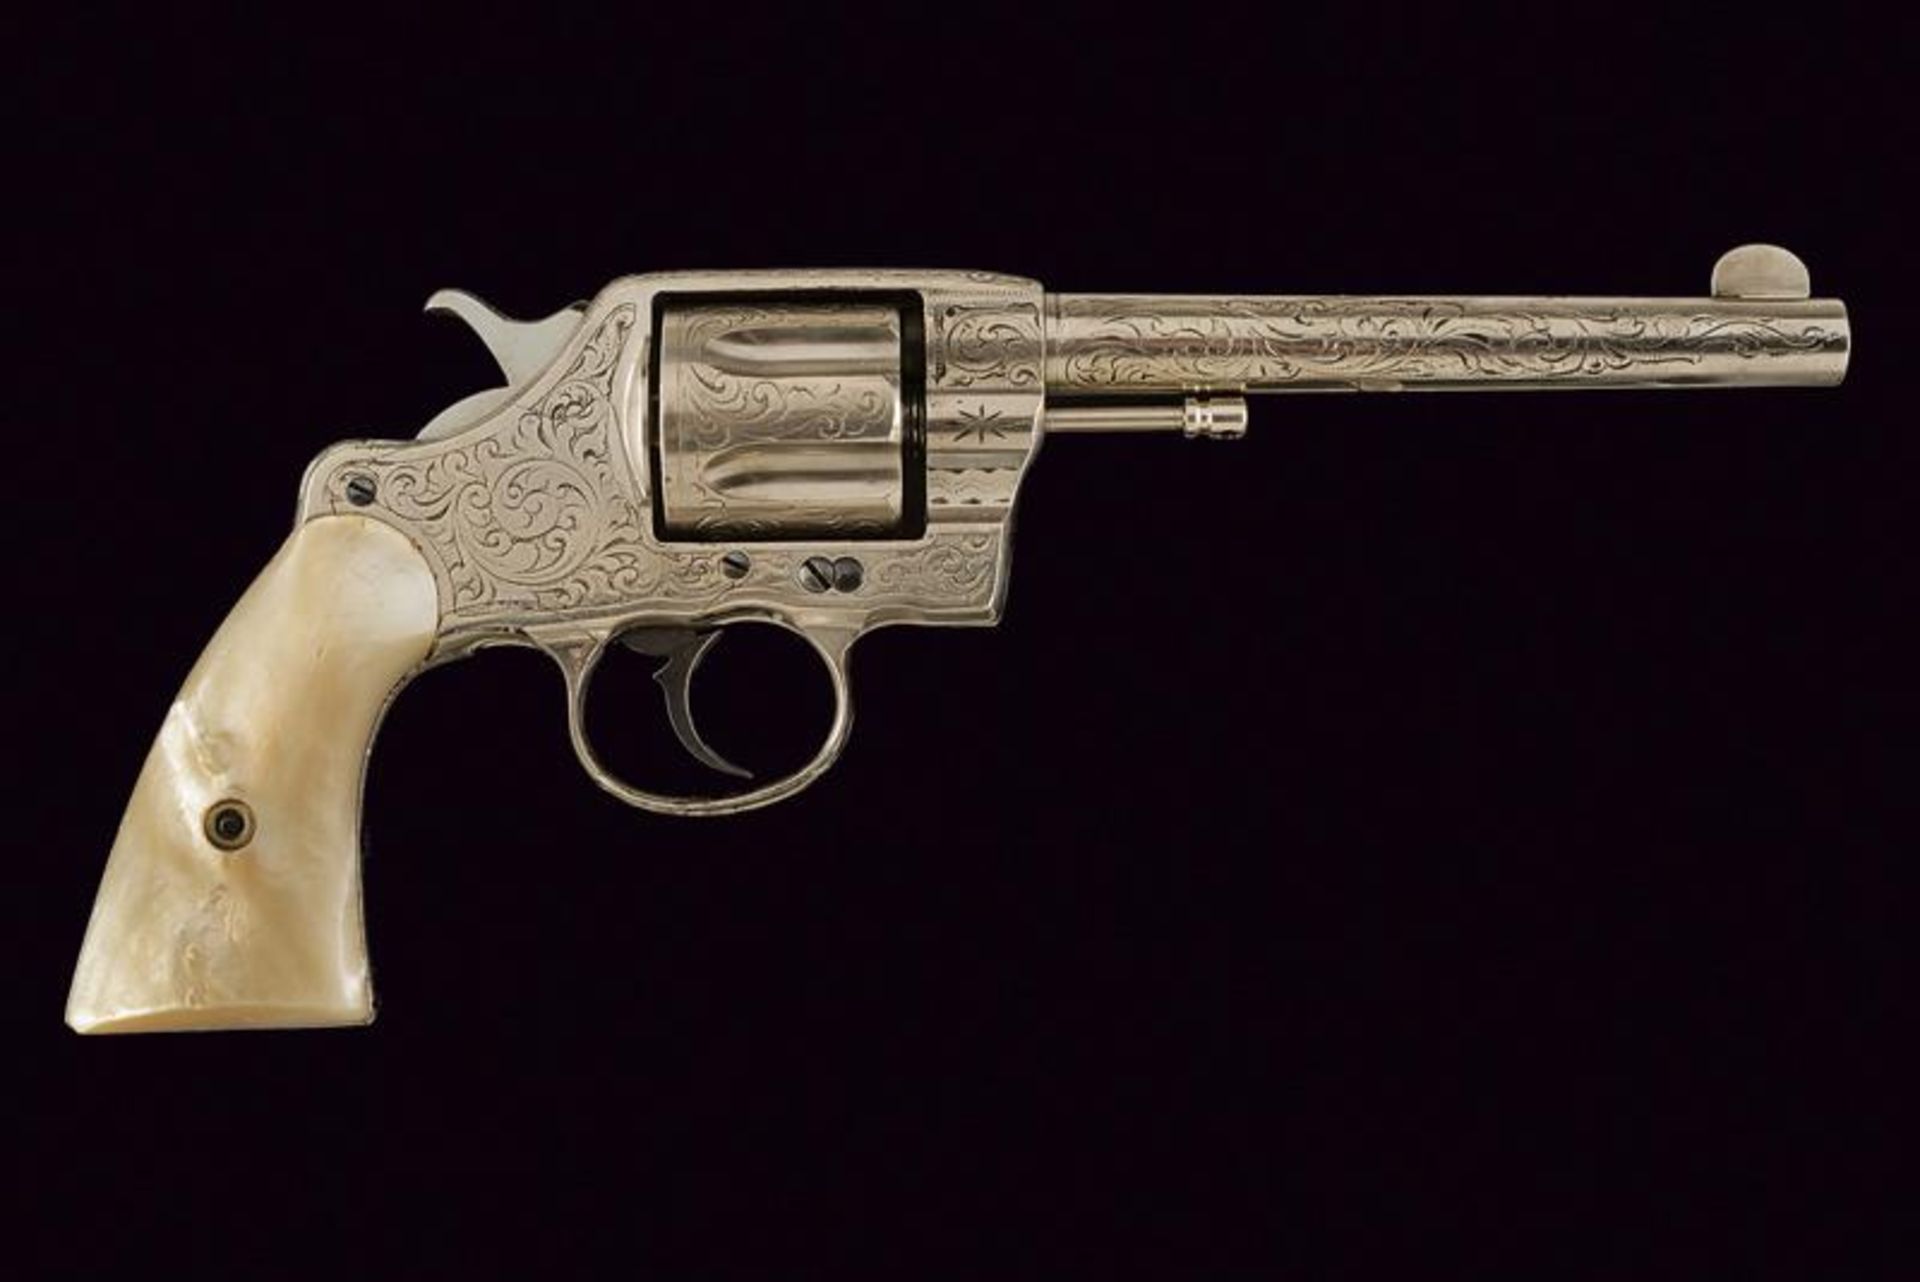 An engraved 1889 model Colt revolver